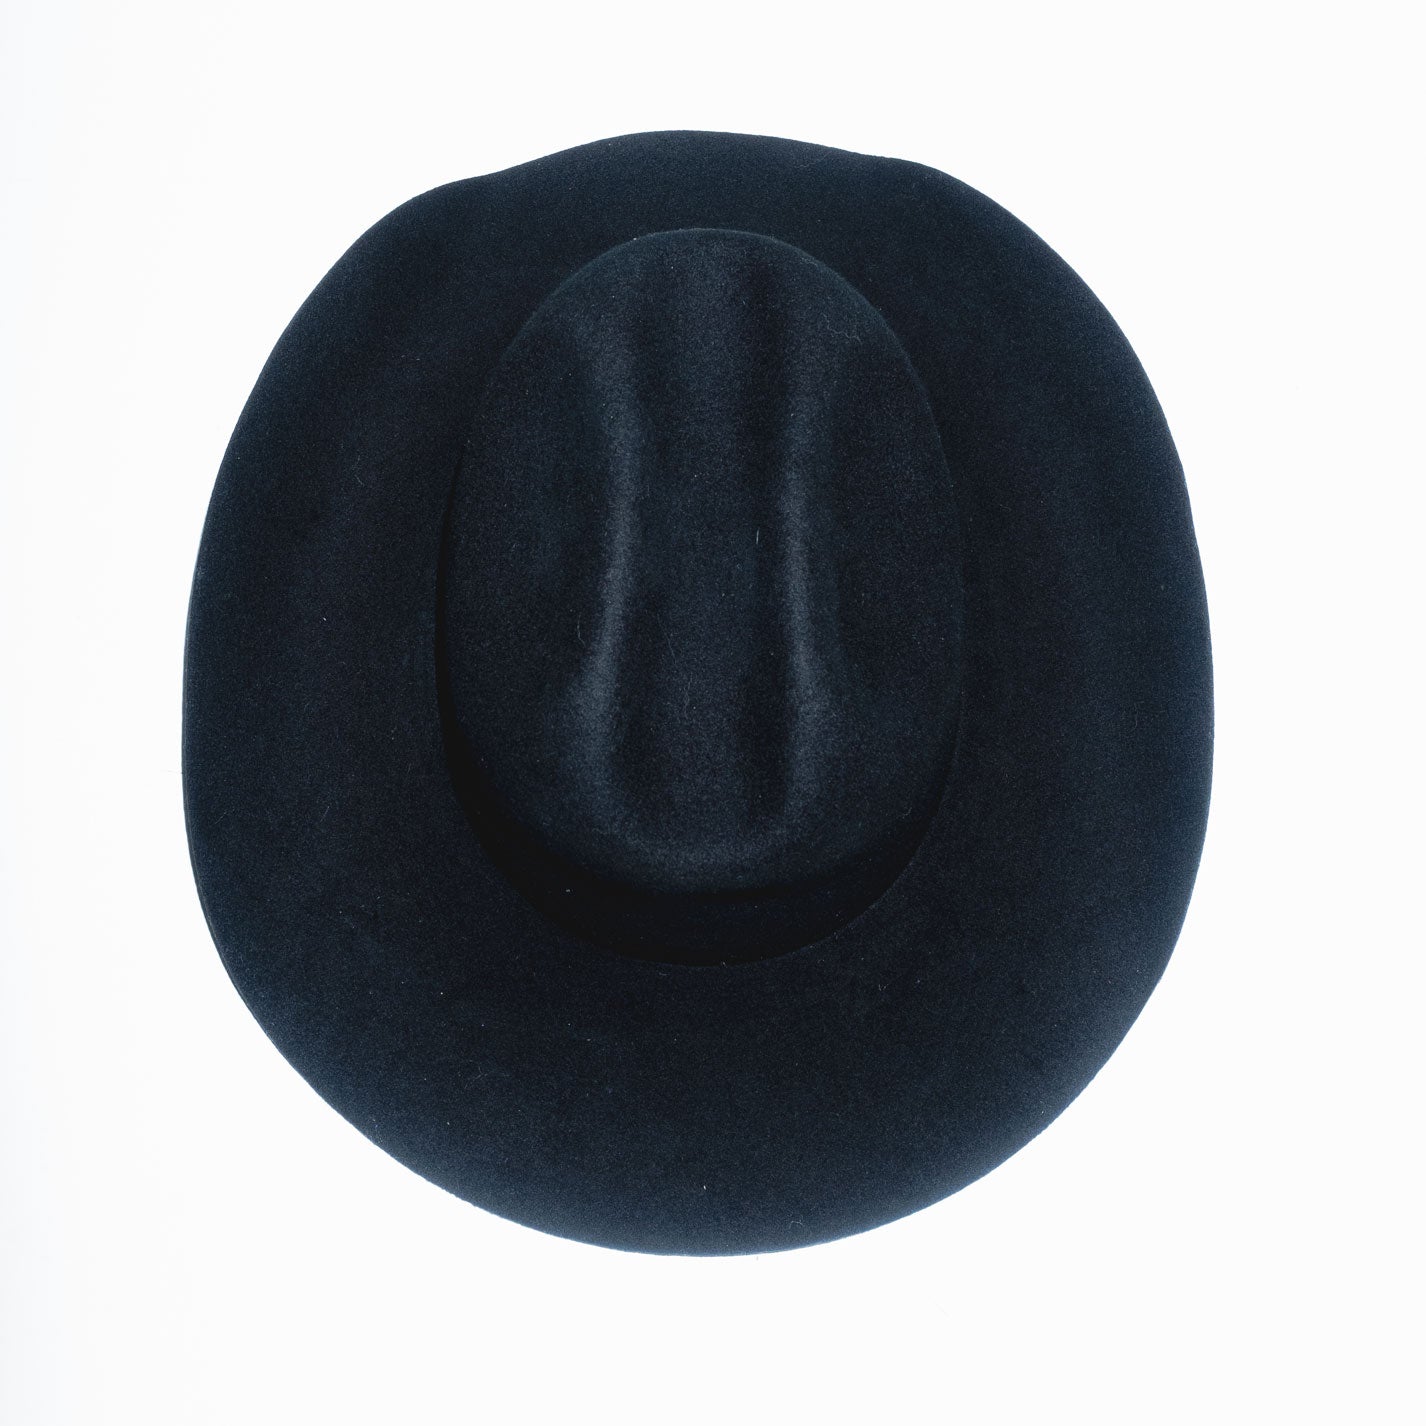 Archive Cowboy Hat in Black Felt